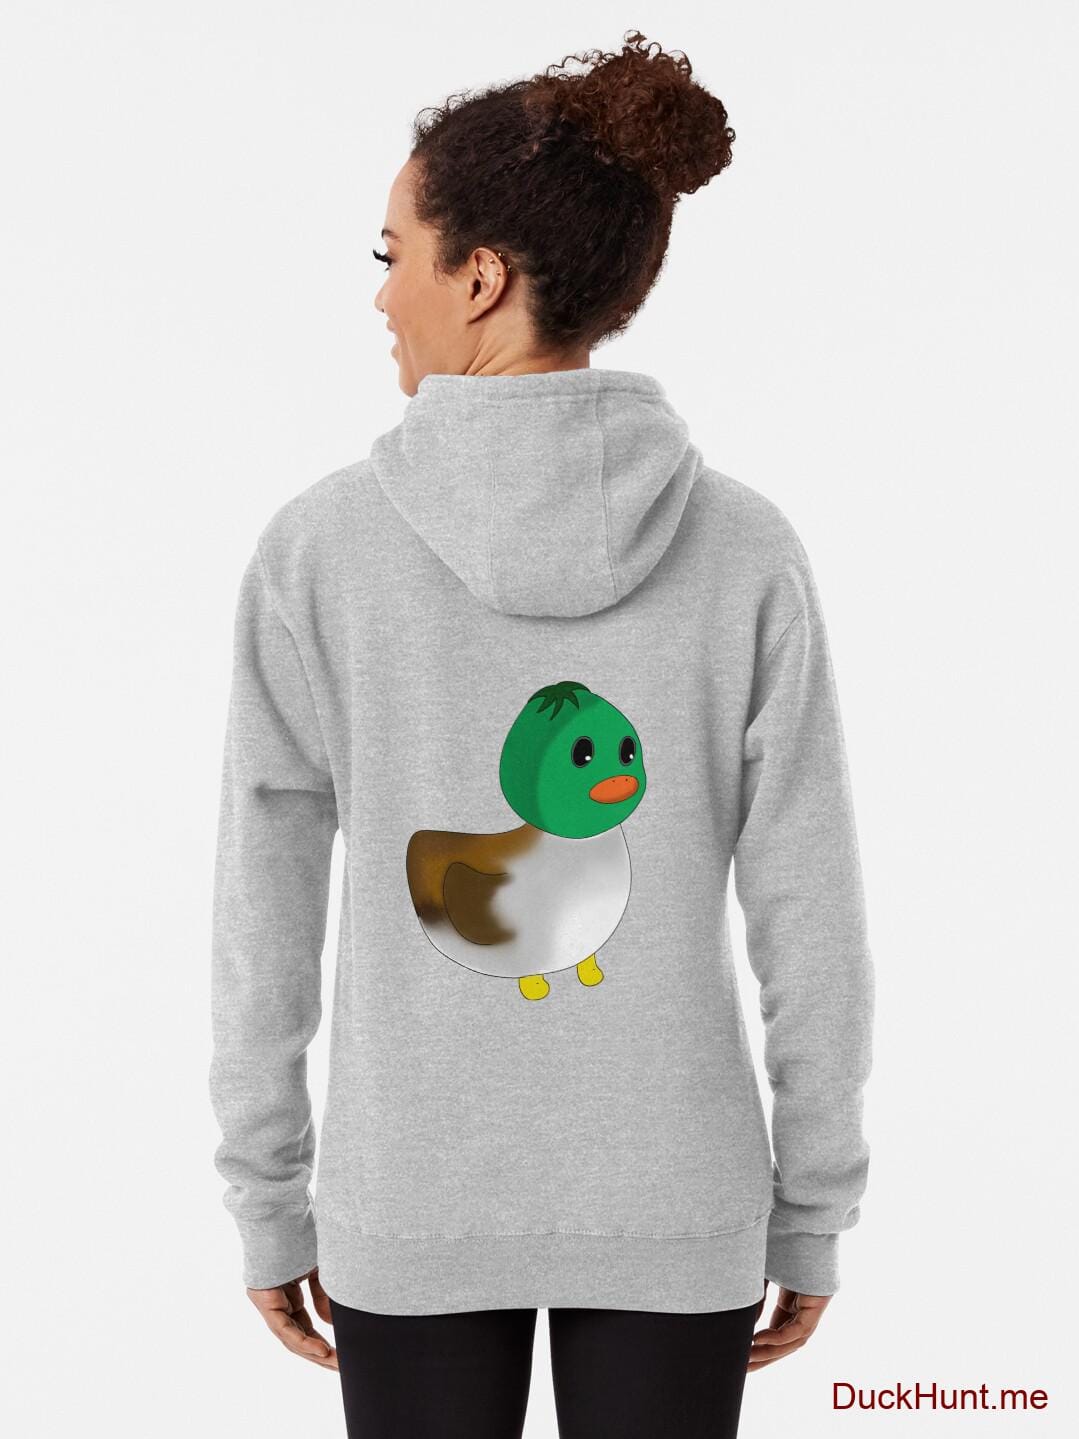 Normal Duck Heather Grey Pullover Hoodie (Back printed) alternative image 1